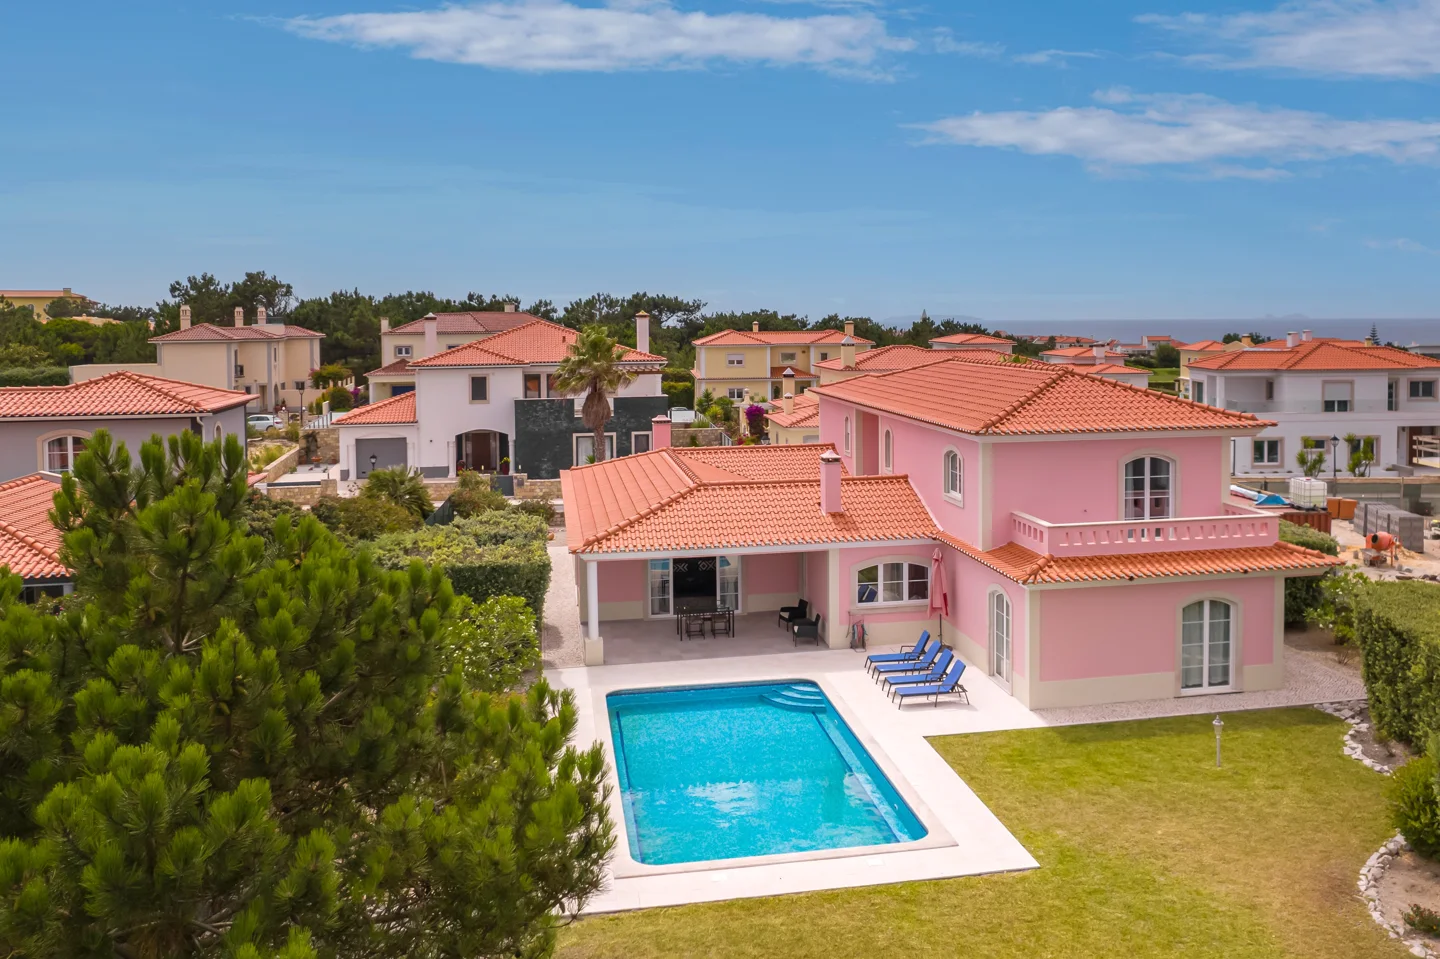 Indulge in Coastal Elegance and Golfers' Paradise at Praia D’el Rey's Stunning Villa!